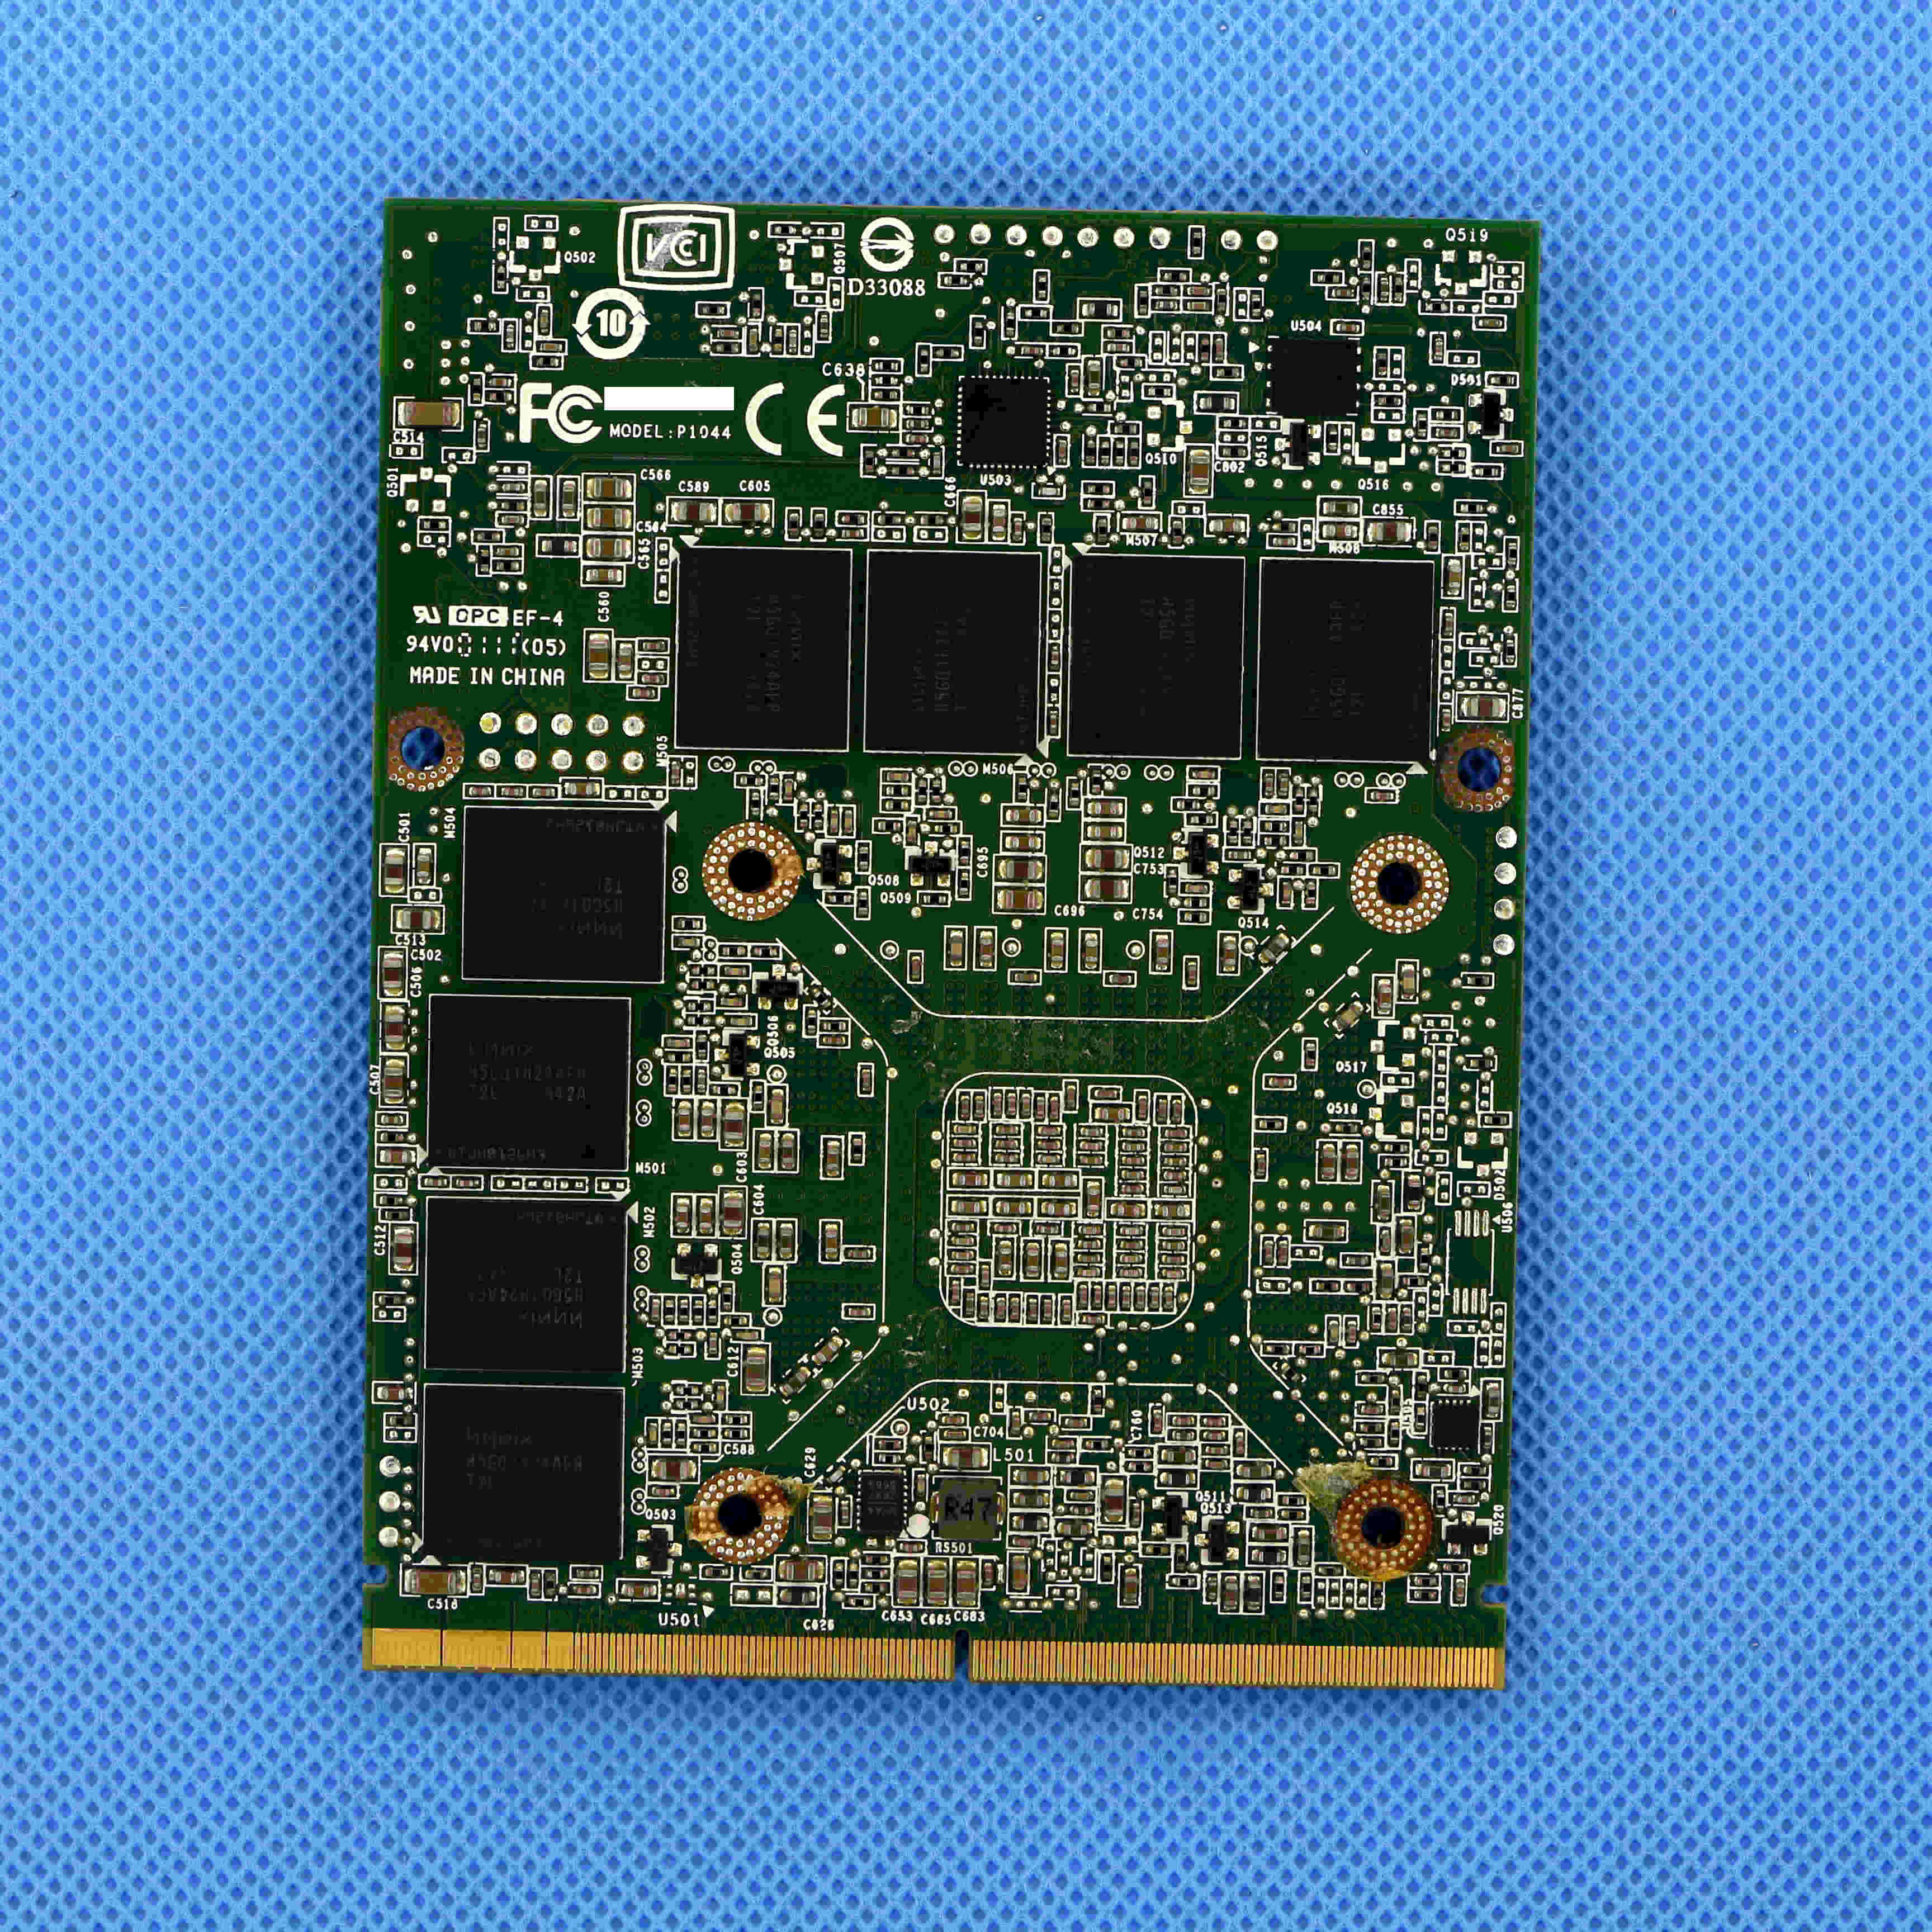 nVIDIA 4000m Q4000M 2GB GDDR5 MXM 3.0b Video Card for Clevo P150HM P170HM P150EM